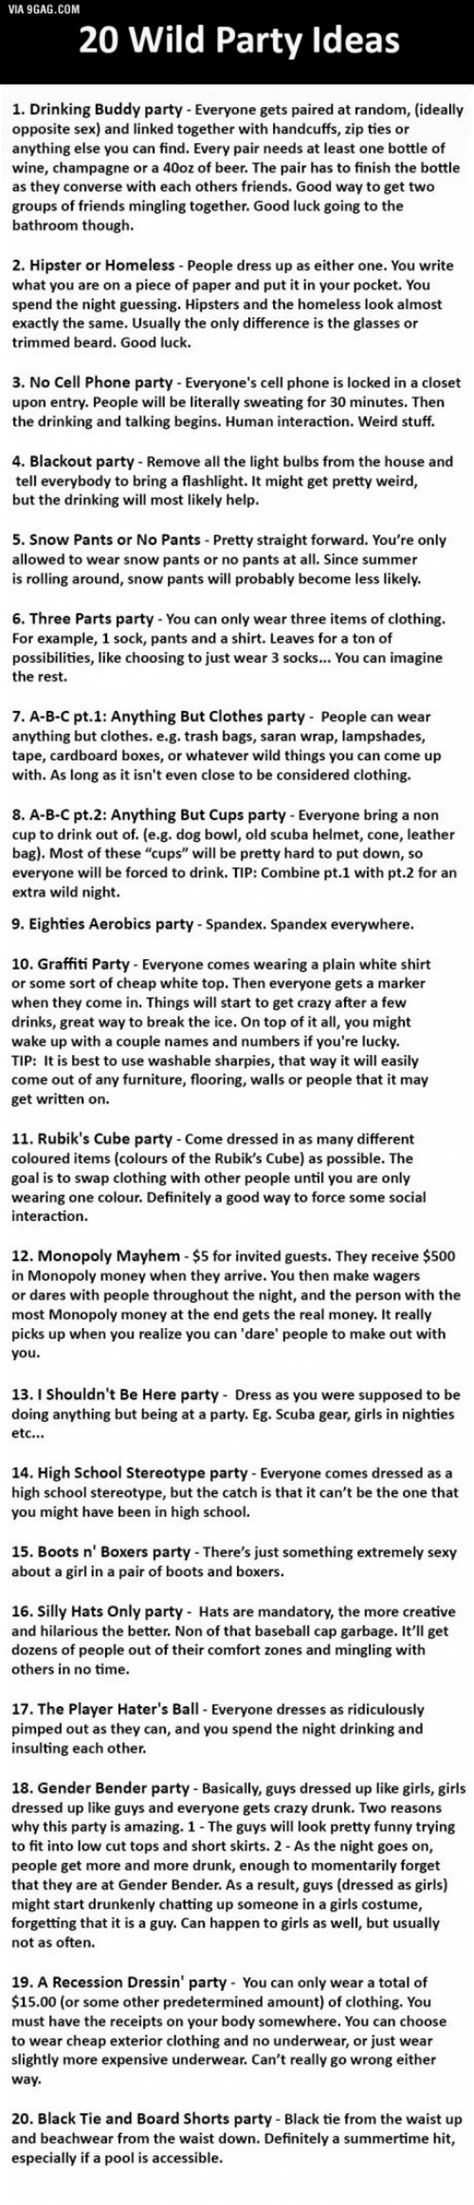 20 wild party ideas via 9gagcom 1 drinking buddy party